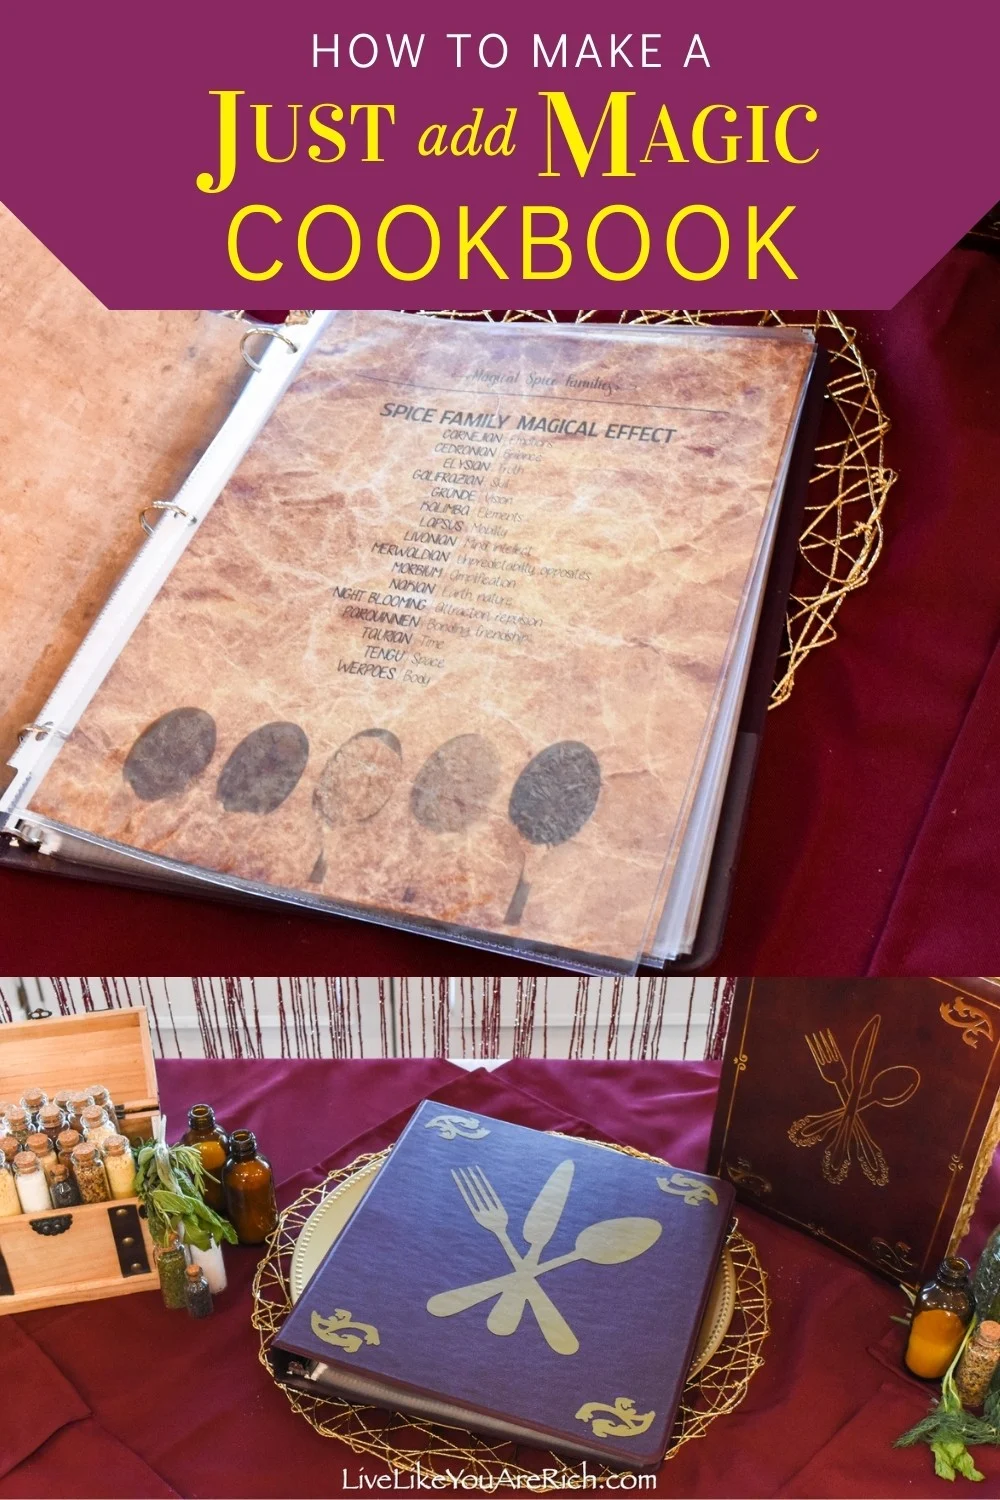 How to Make a DIY Just add Magic Cookbook